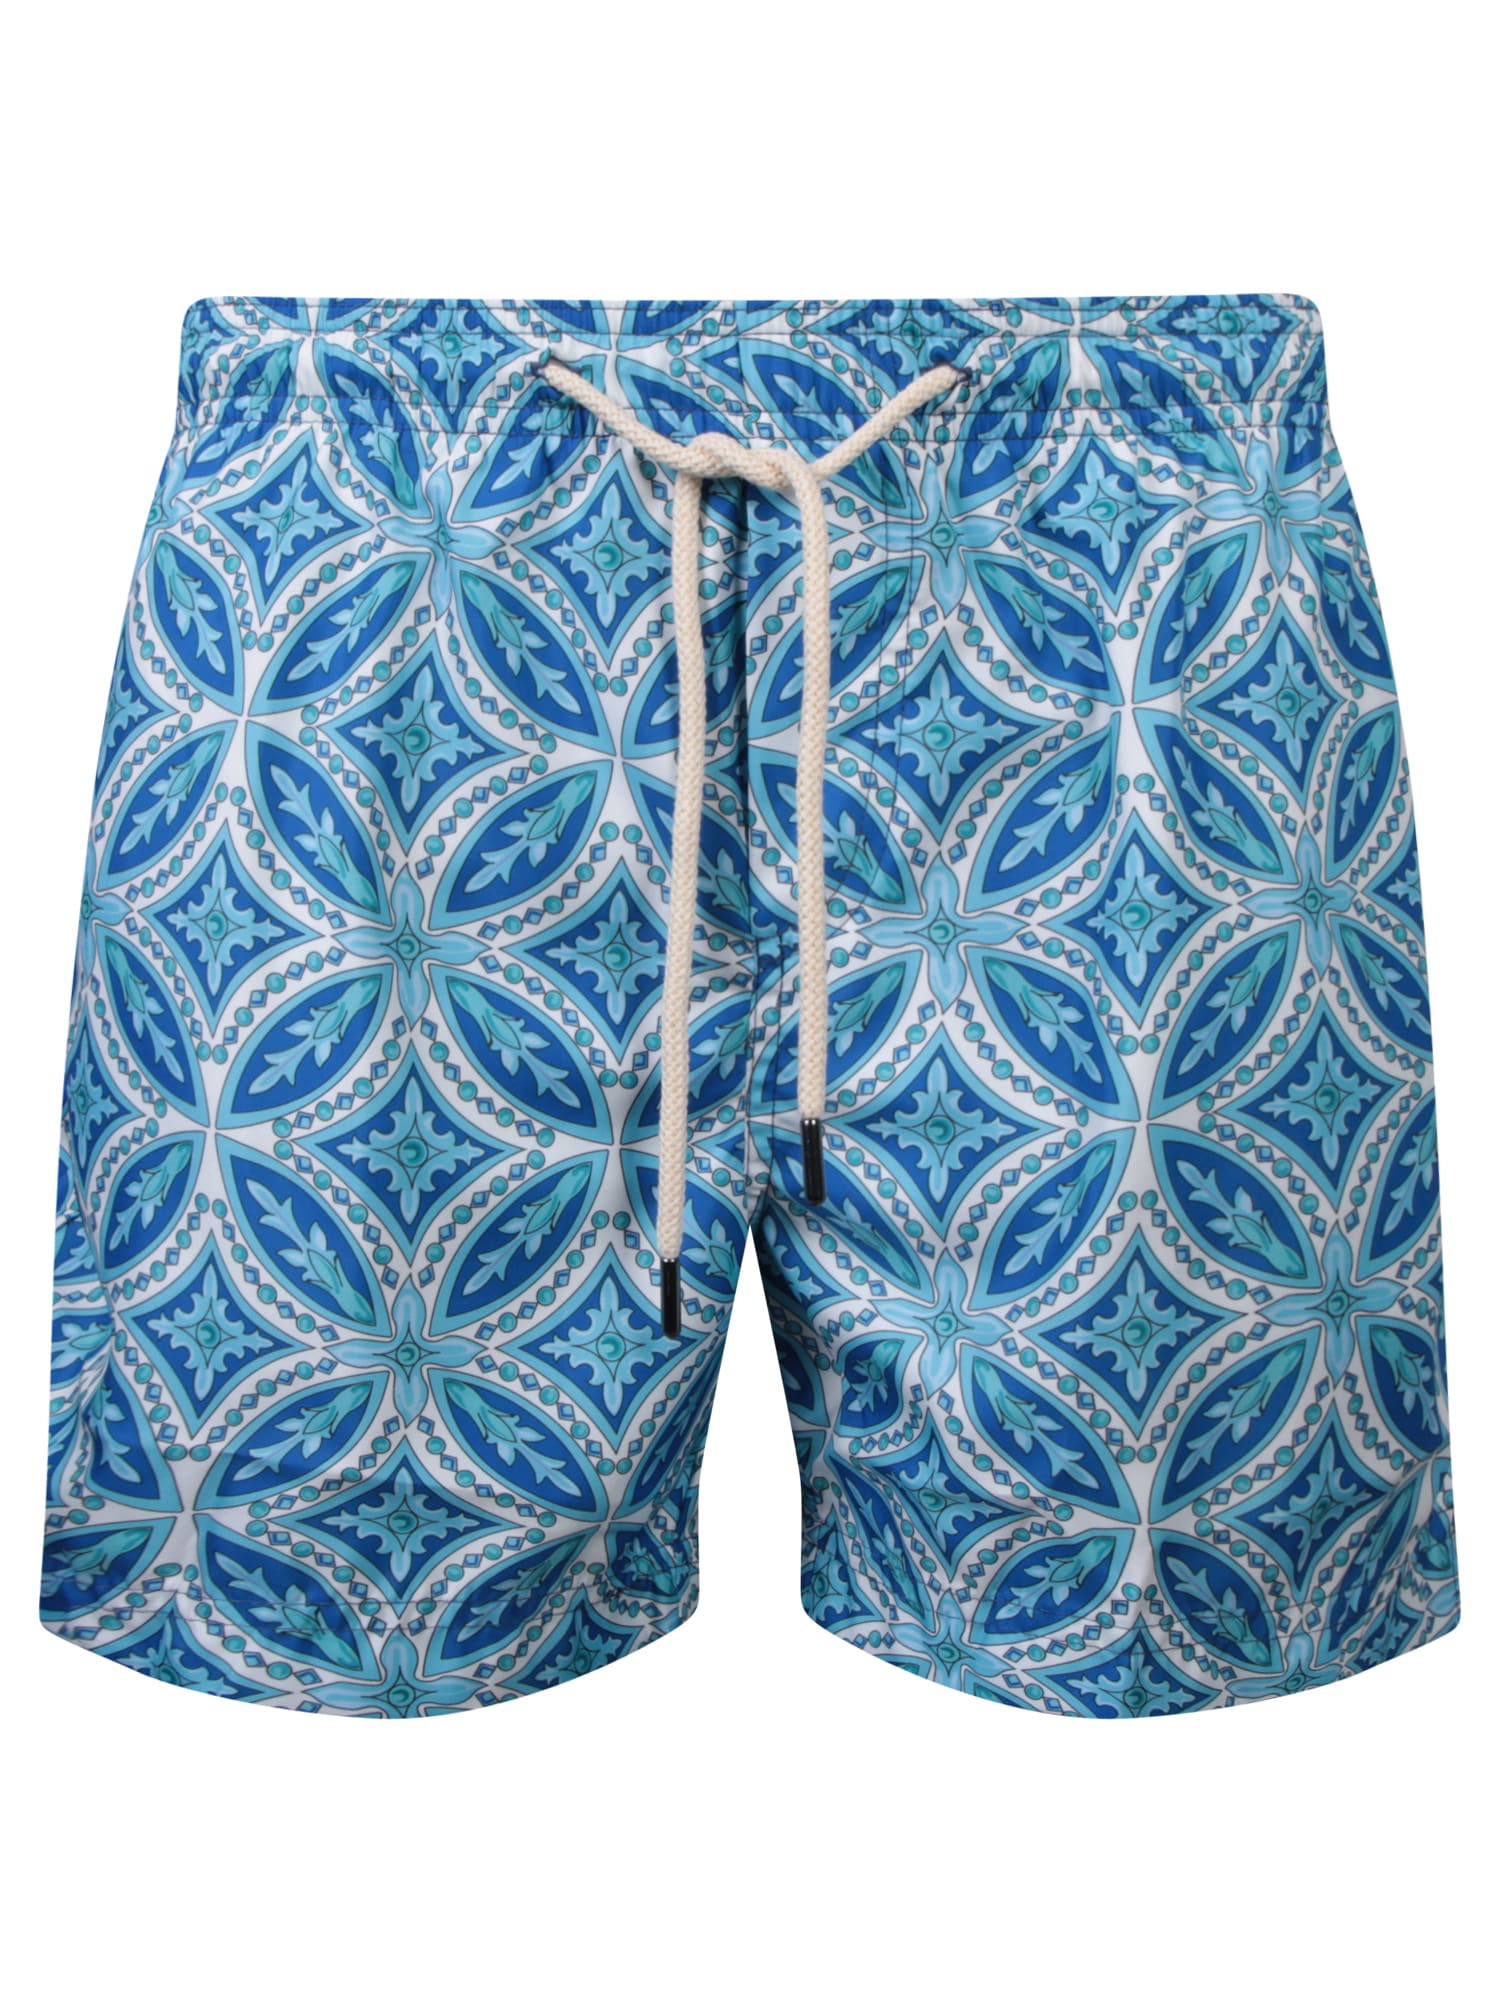 Patterned Swim Shorts In Sky Blue/blue/white